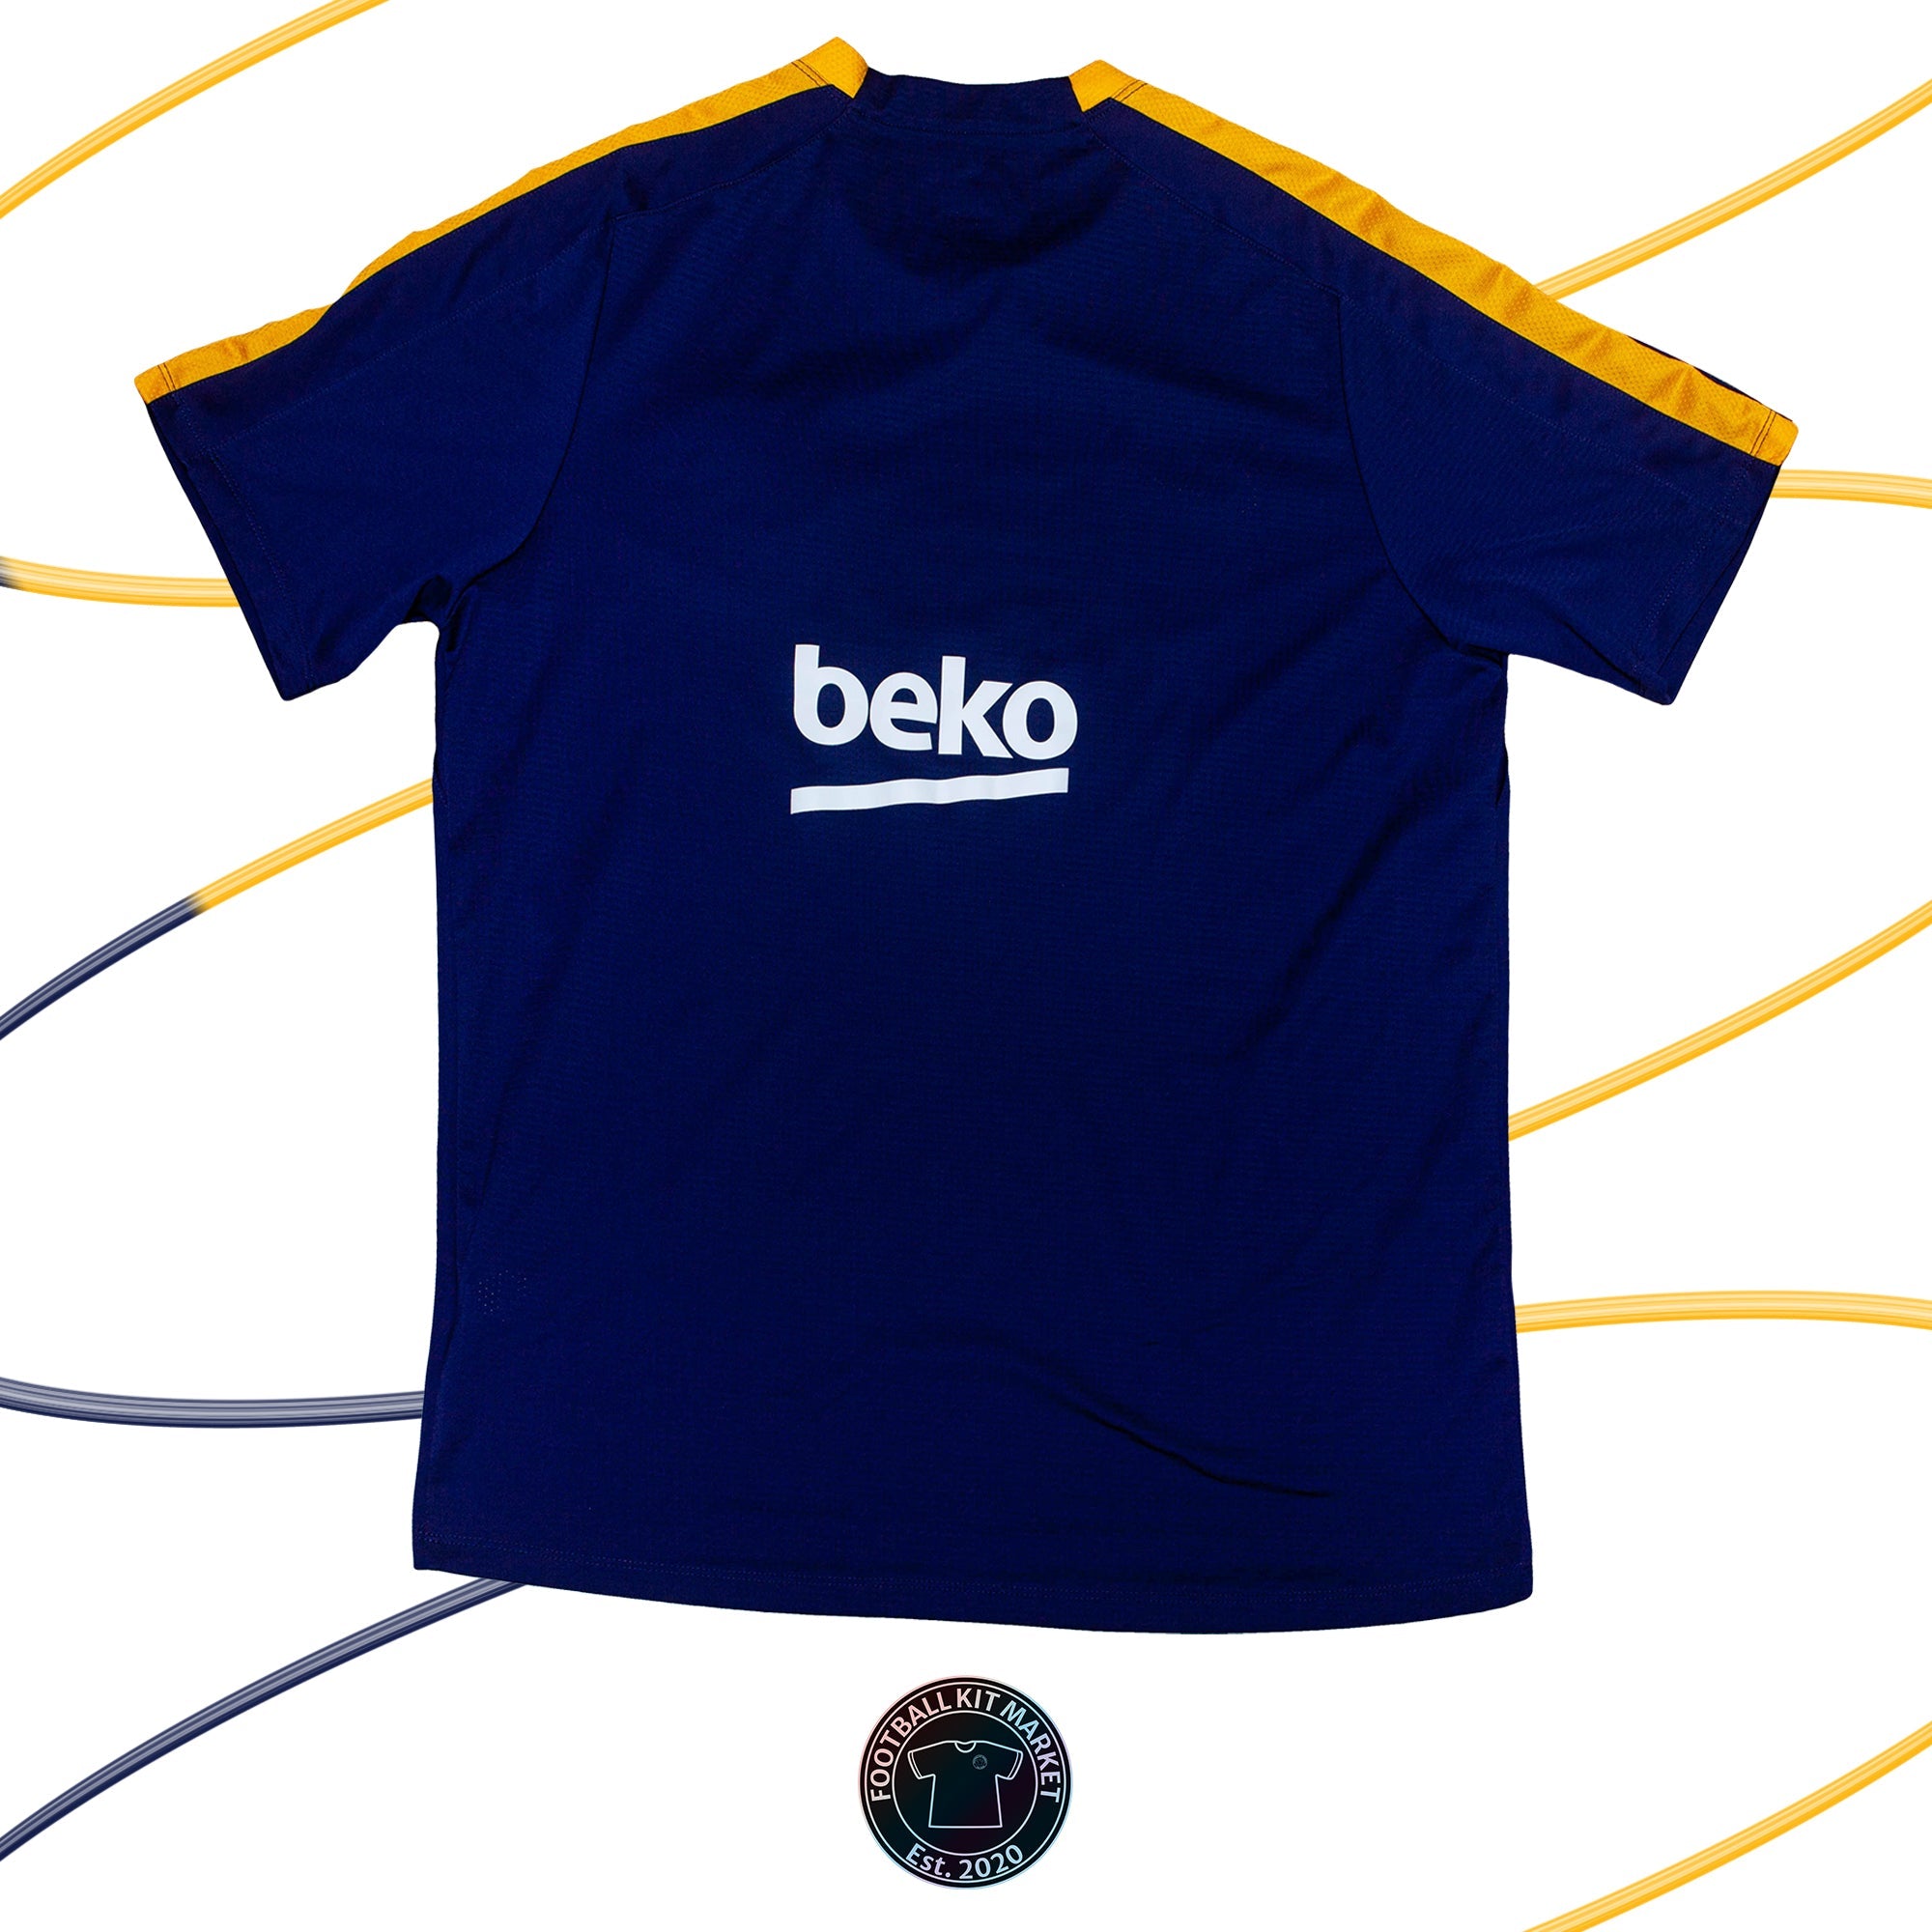 Genuine BARCELONA Training Shirt (2015-2016) - NIKE (XL) - Product Image from Football Kit Market